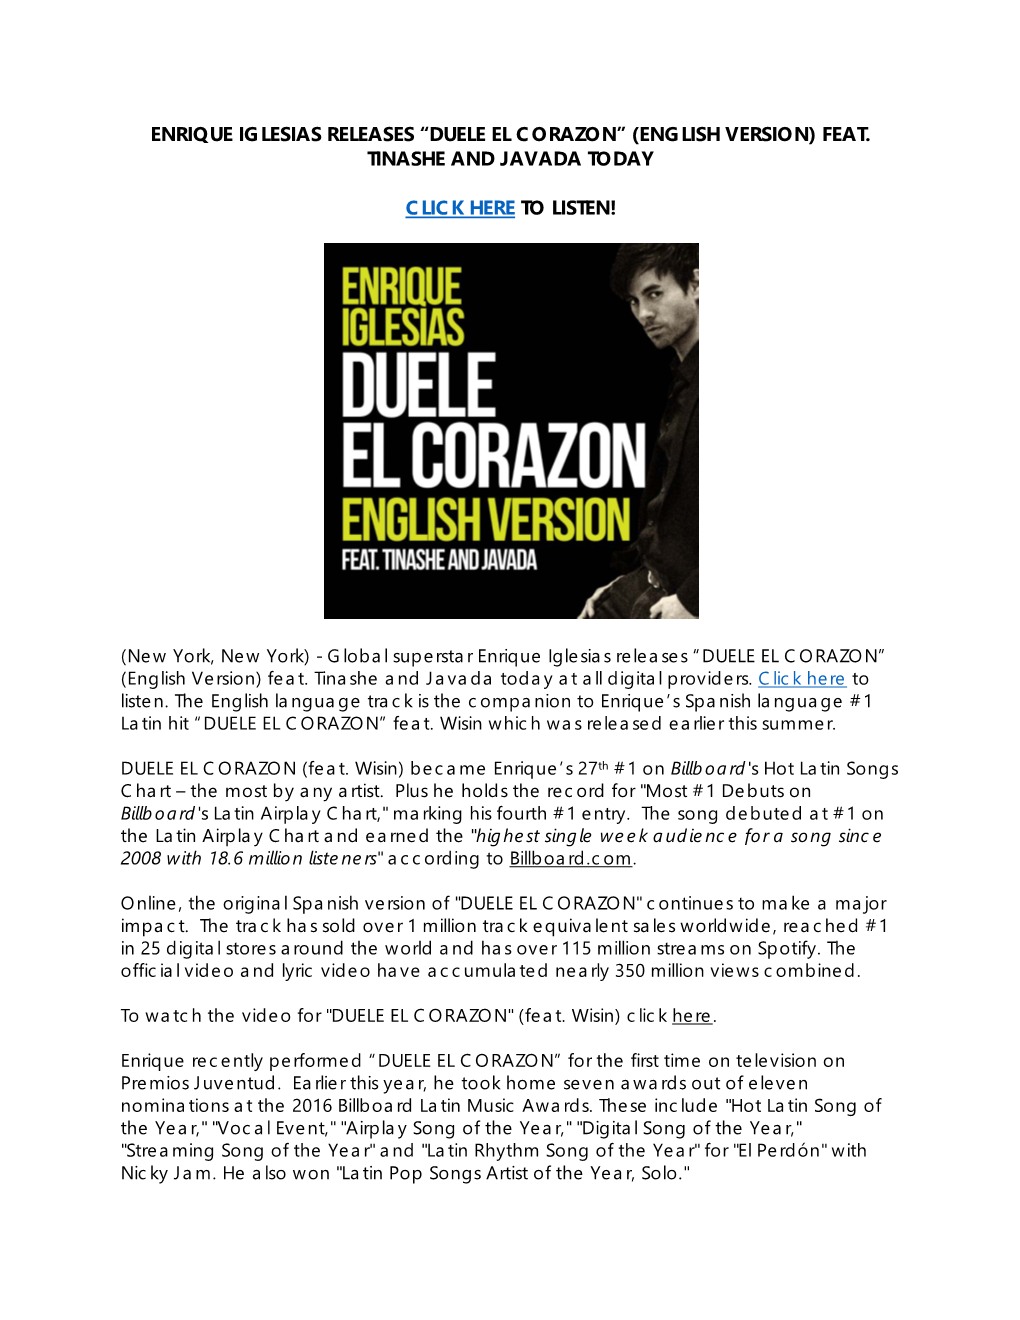 Enrique Iglesias Releases “Duele El Corazon” (English Version) Feat